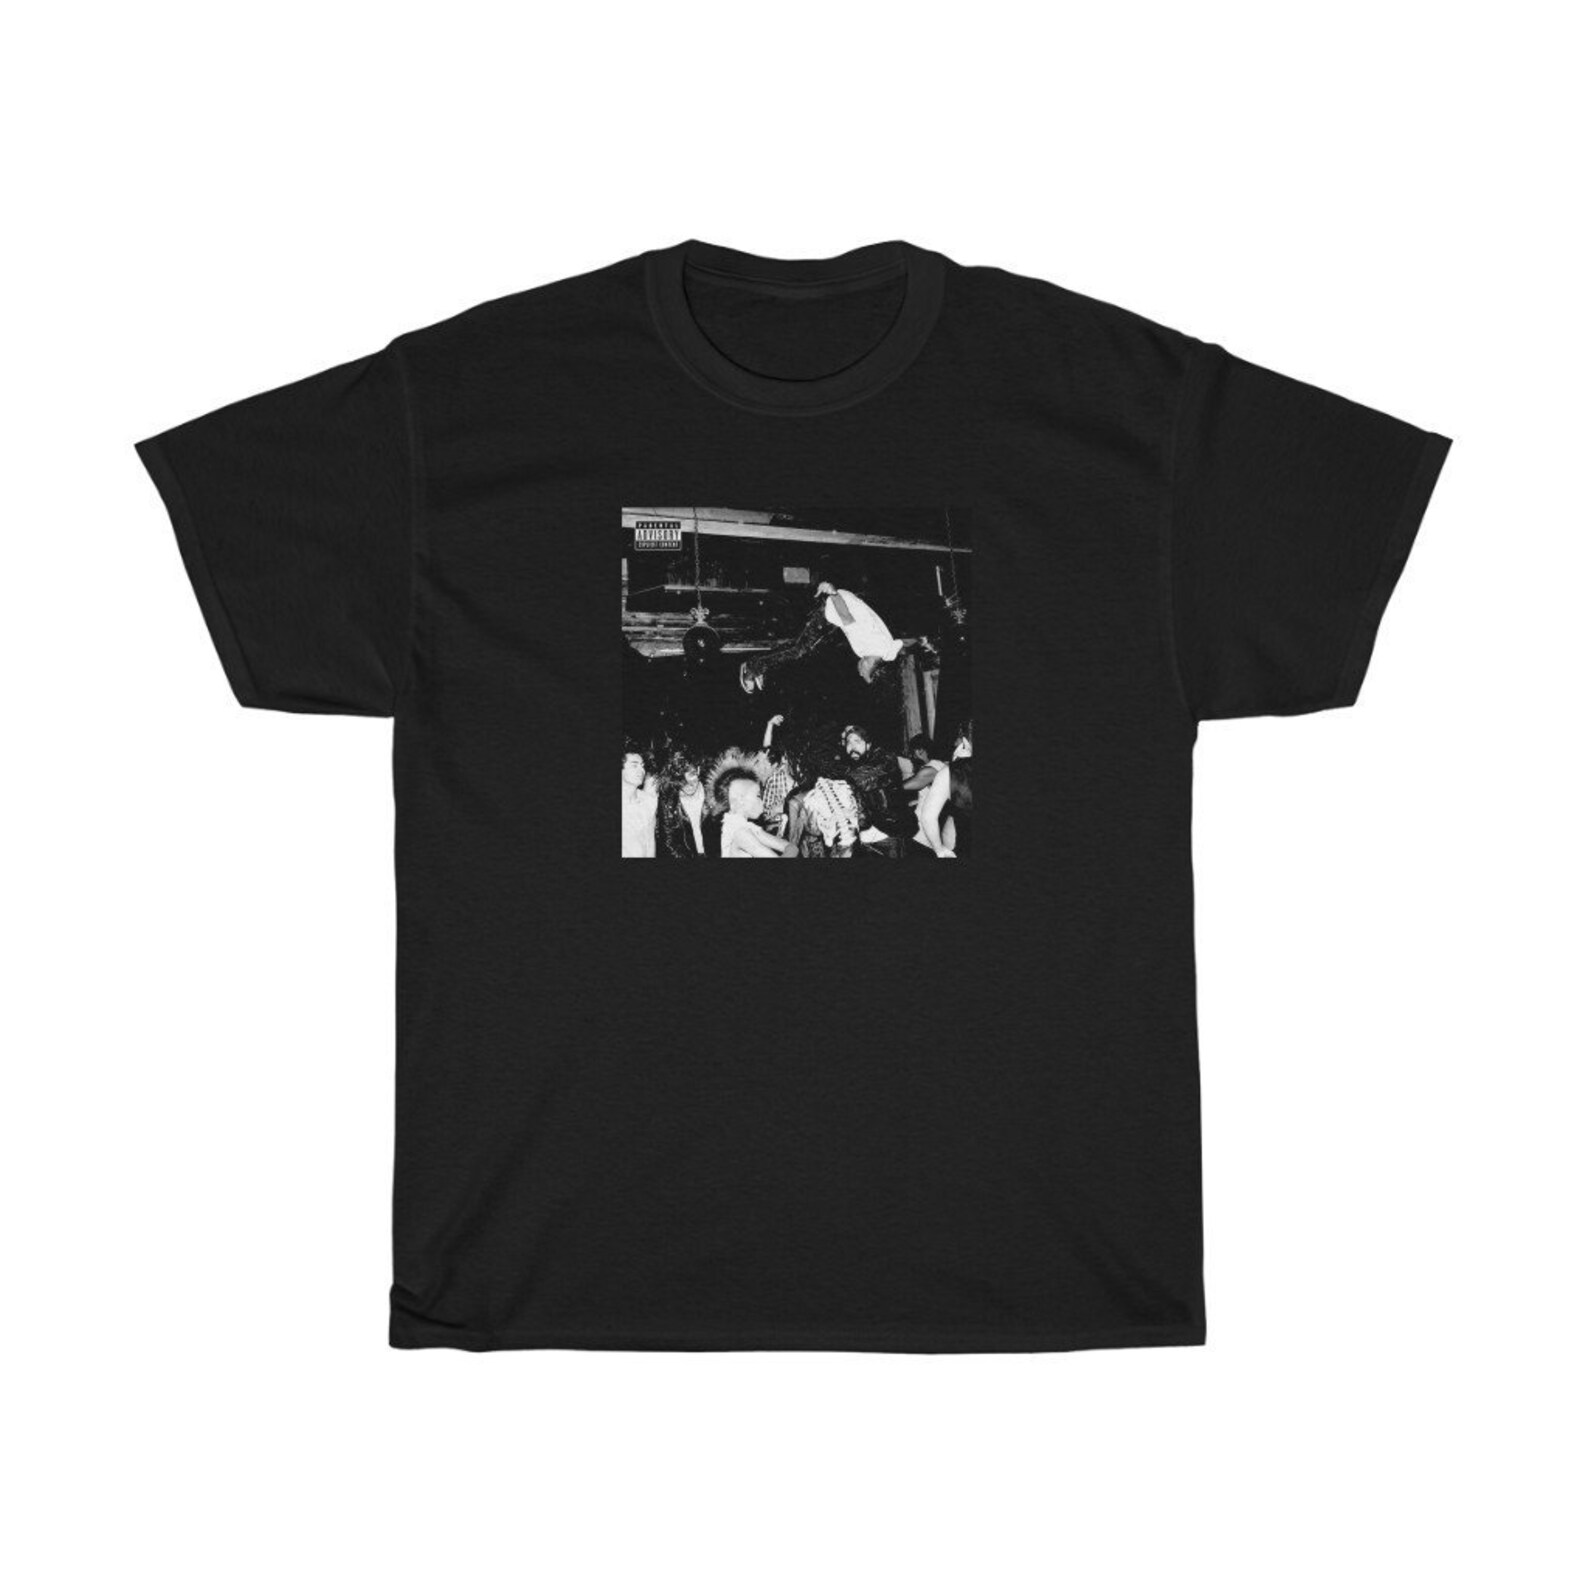 Playboi Carti Die Lit Album Cover T-Shirt Rap/Trap Shirt | Etsy